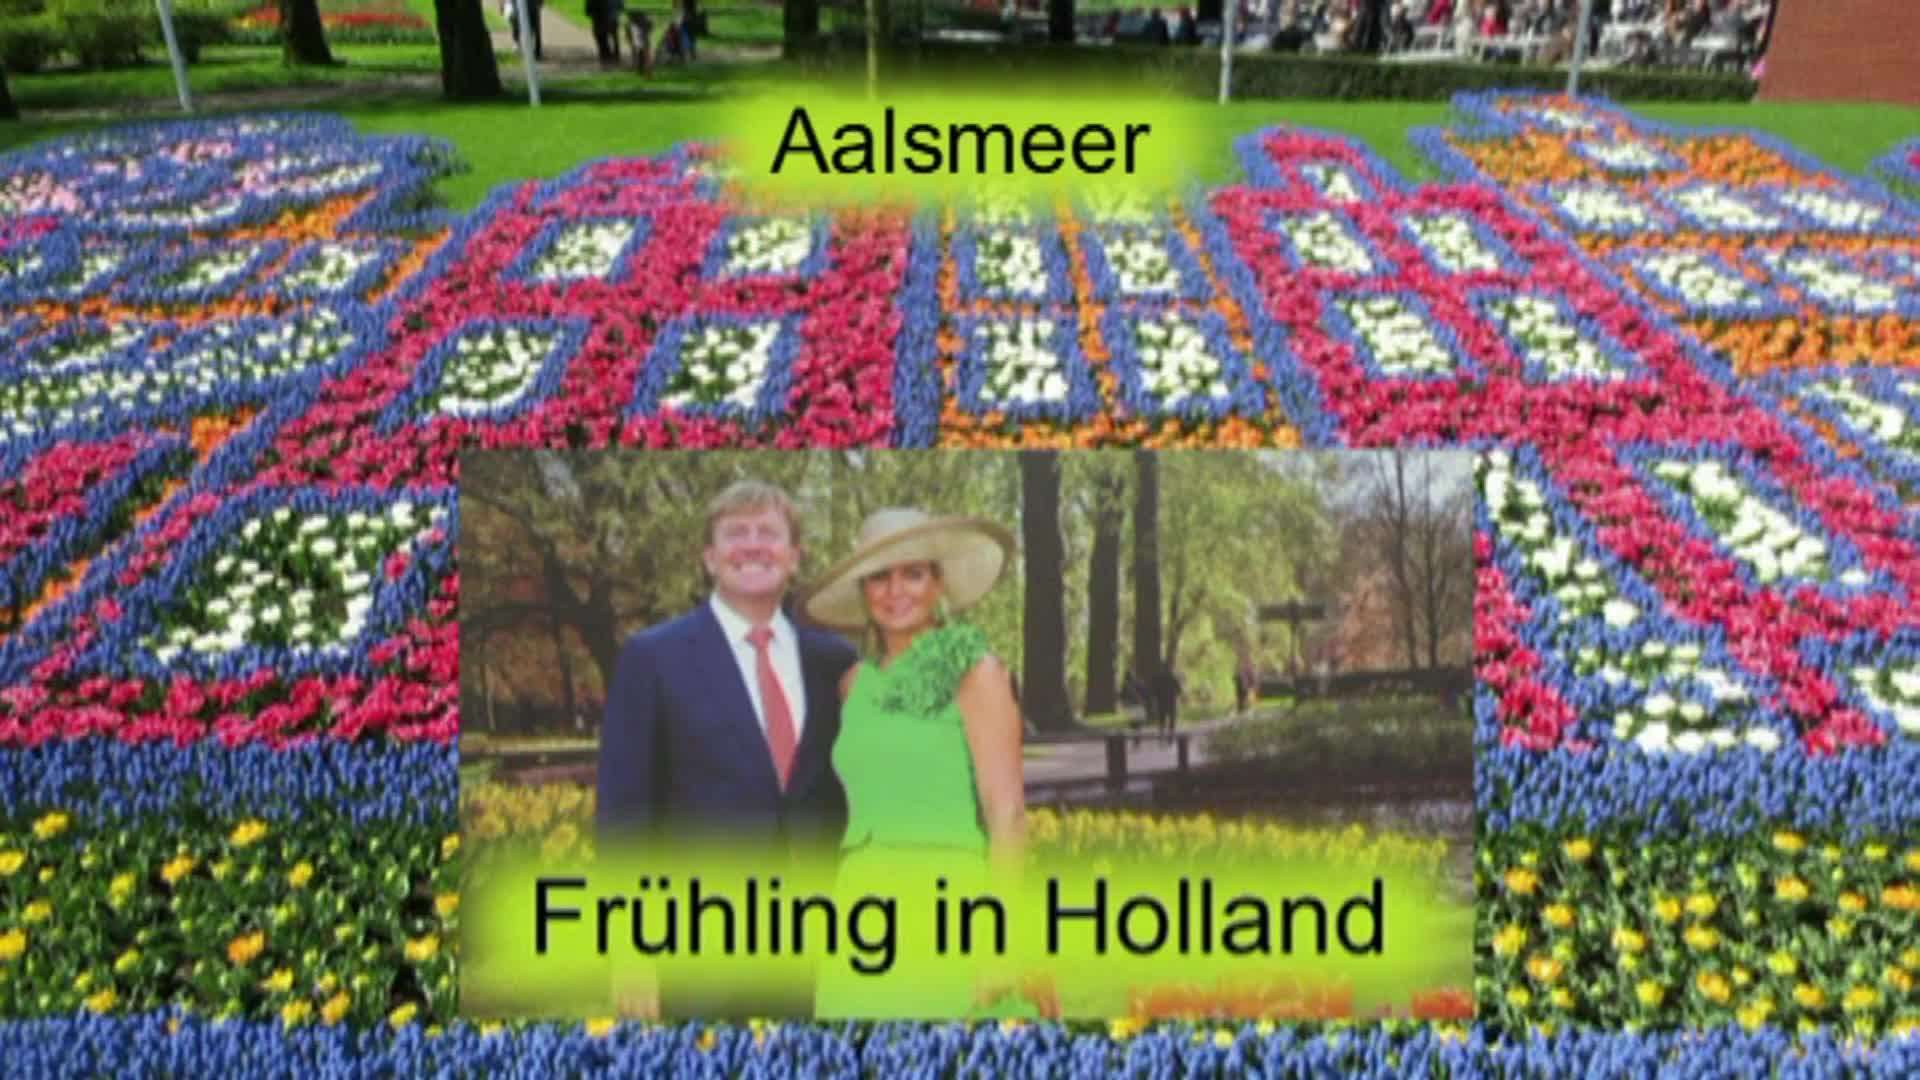 Frühling in Holland (4) Aalsmeer